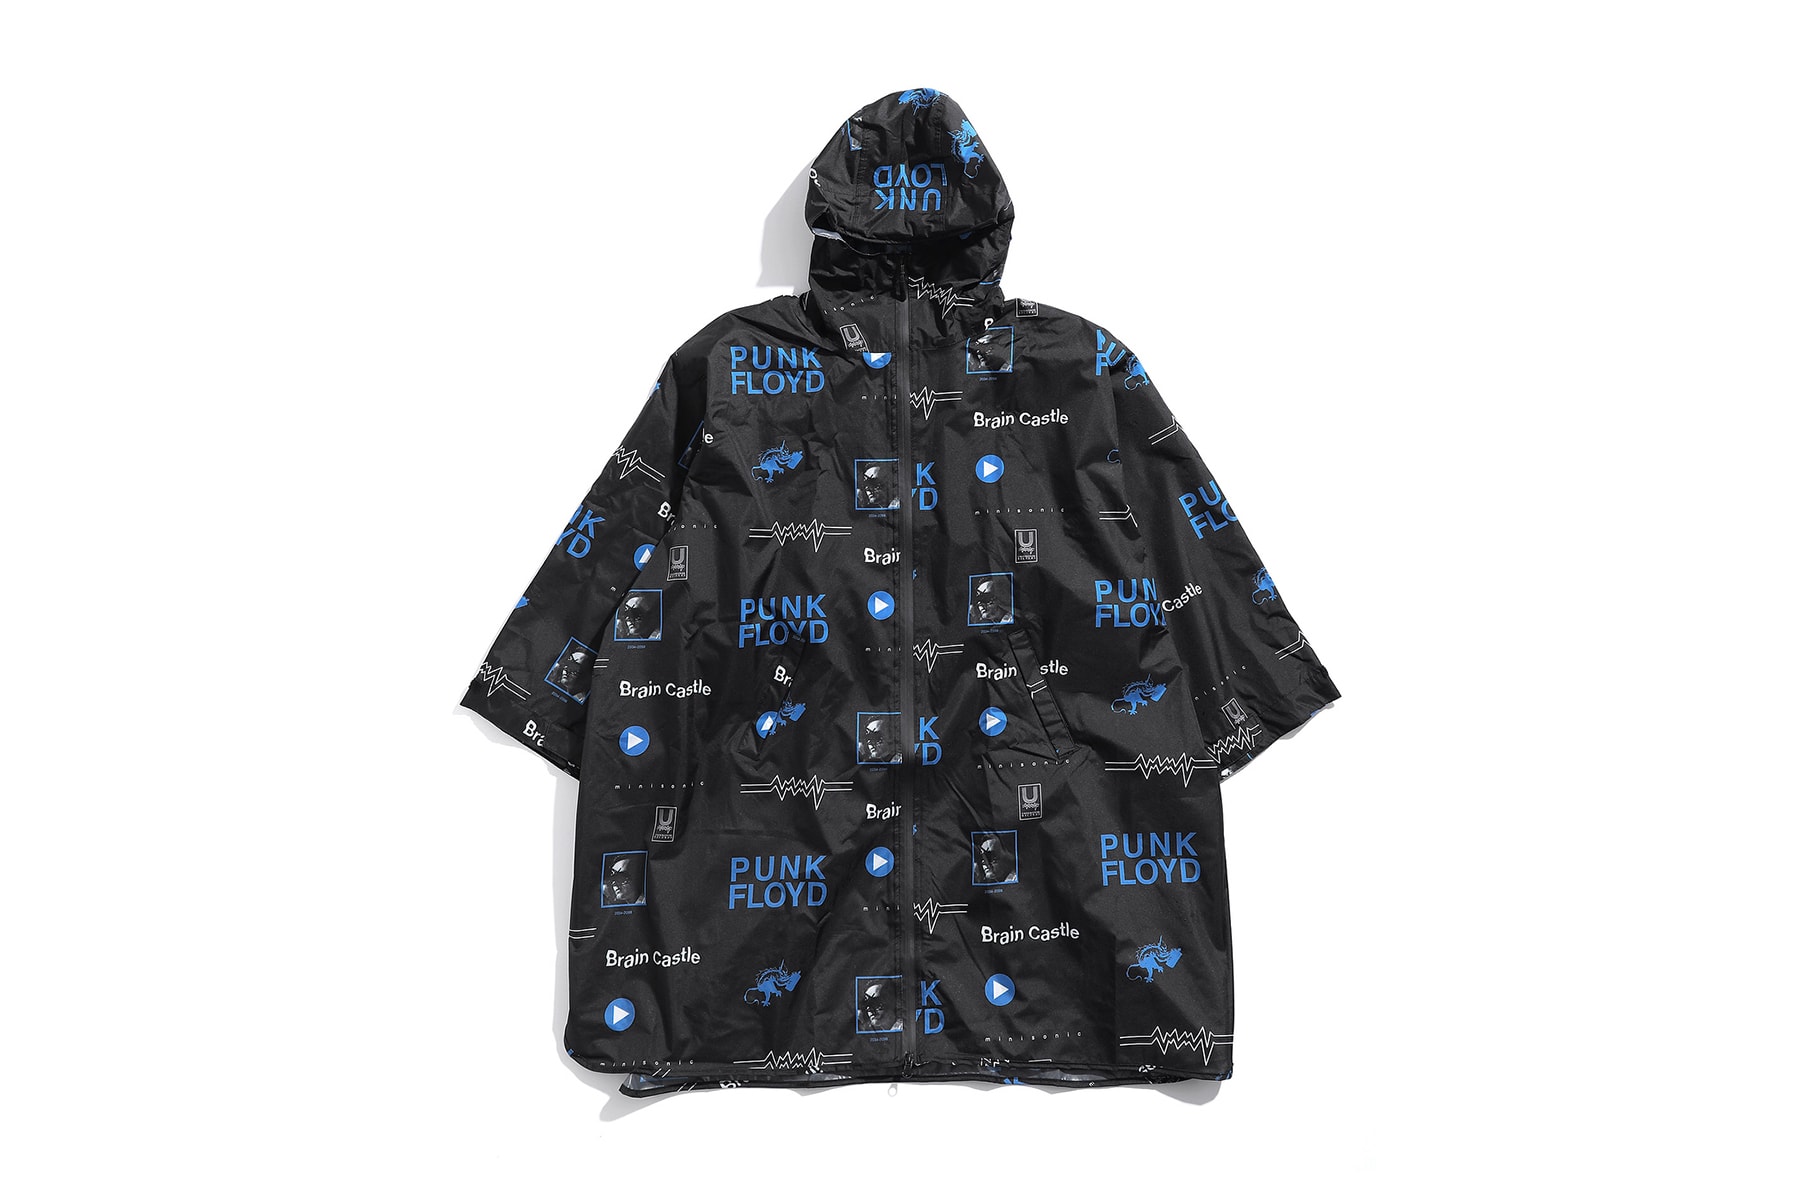 undercover kiu collaboration july 21 2018 printed raincoat black blue punk floyd brain castle zipper pocket